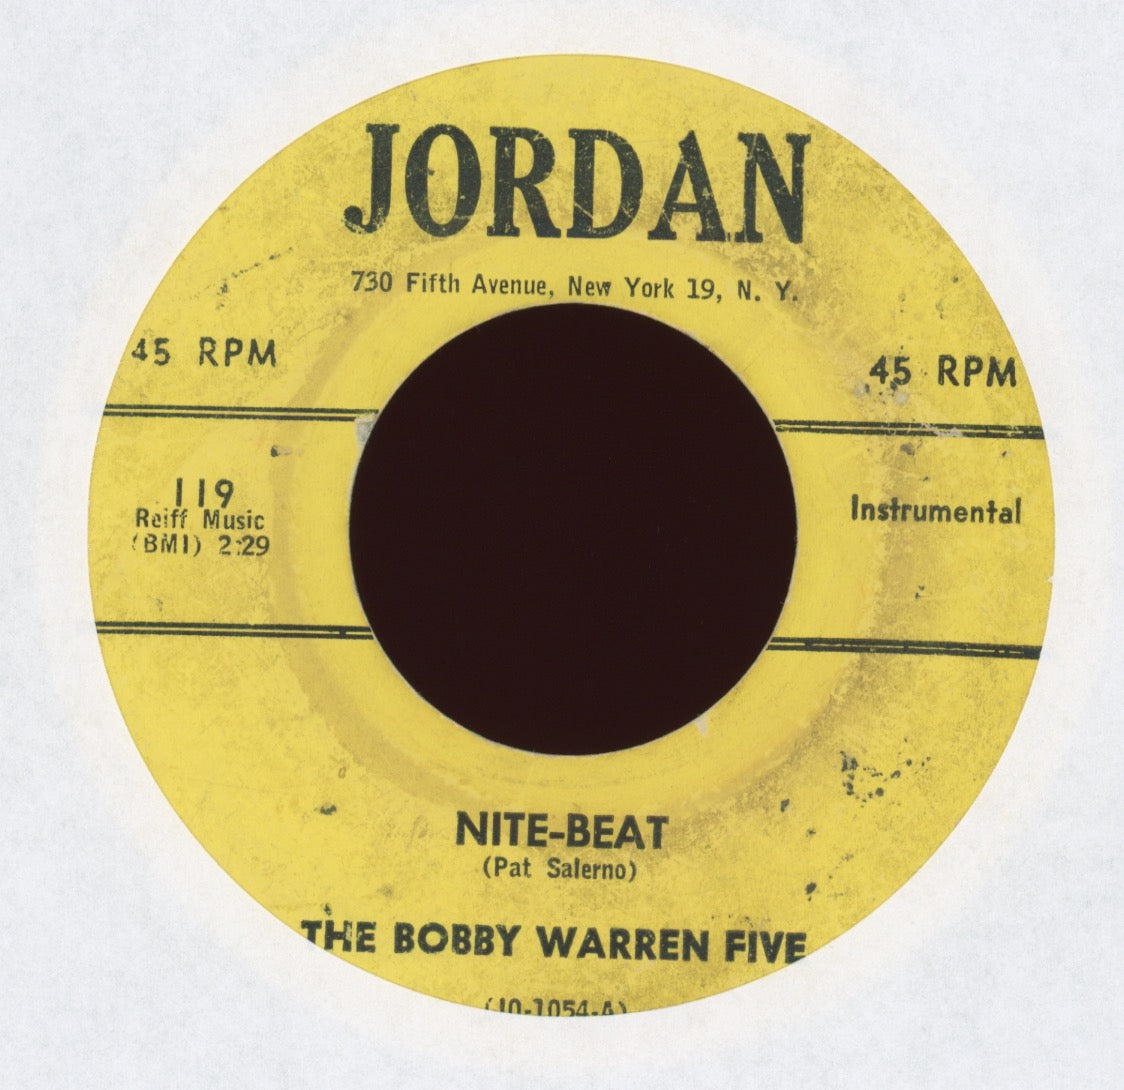 The Bobby Warren Five - Nite-Beat on Jordan